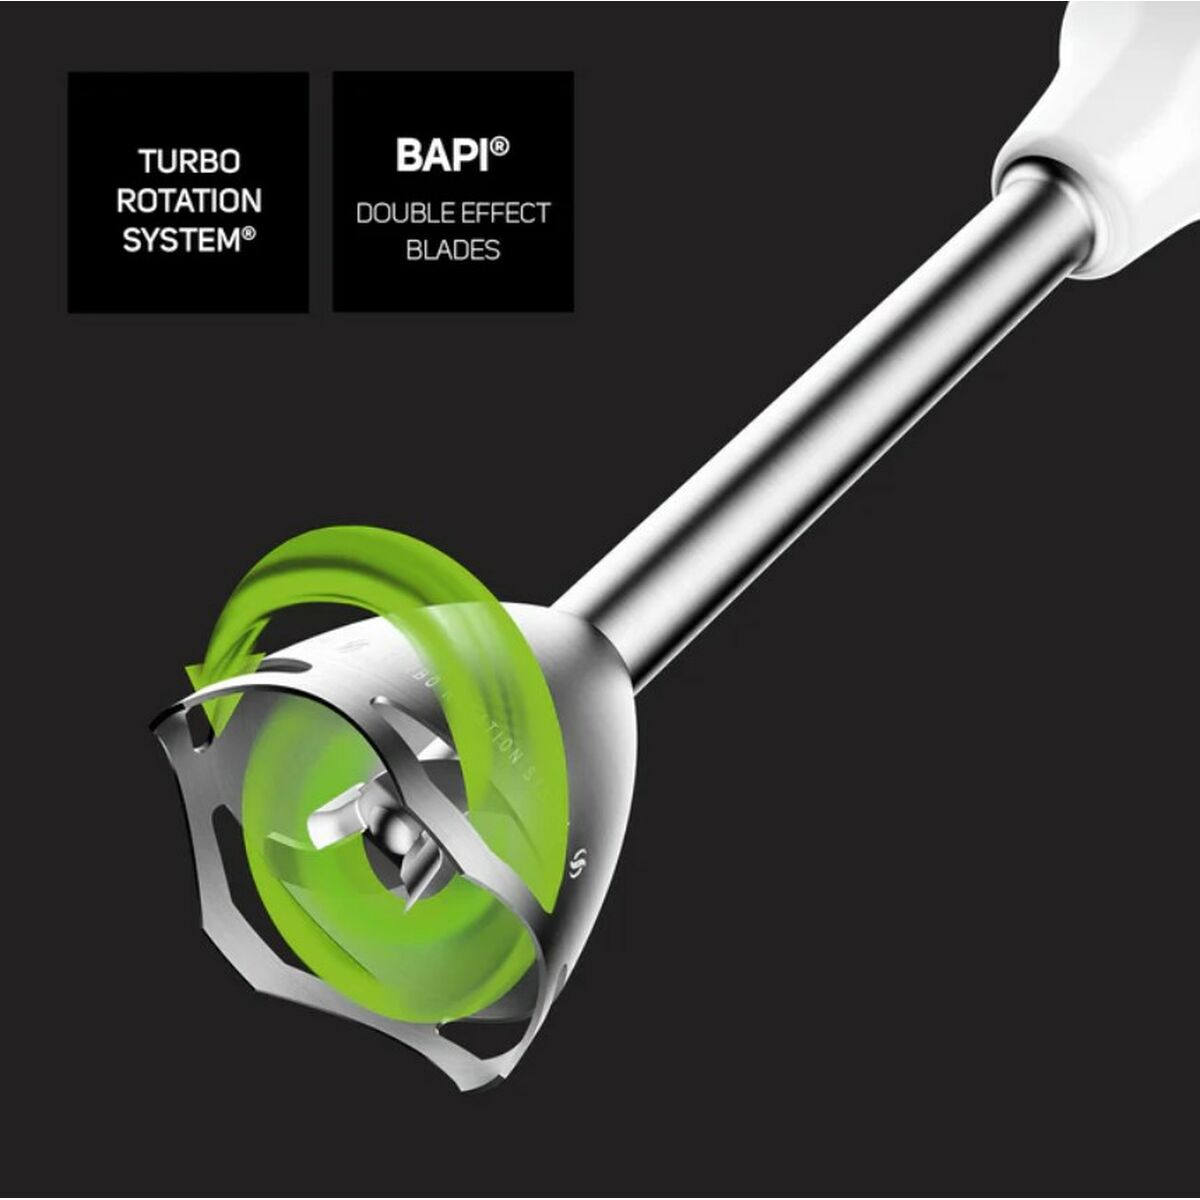 Mixer Taurus Bapi 1500 Premium XL Plus 1500 W